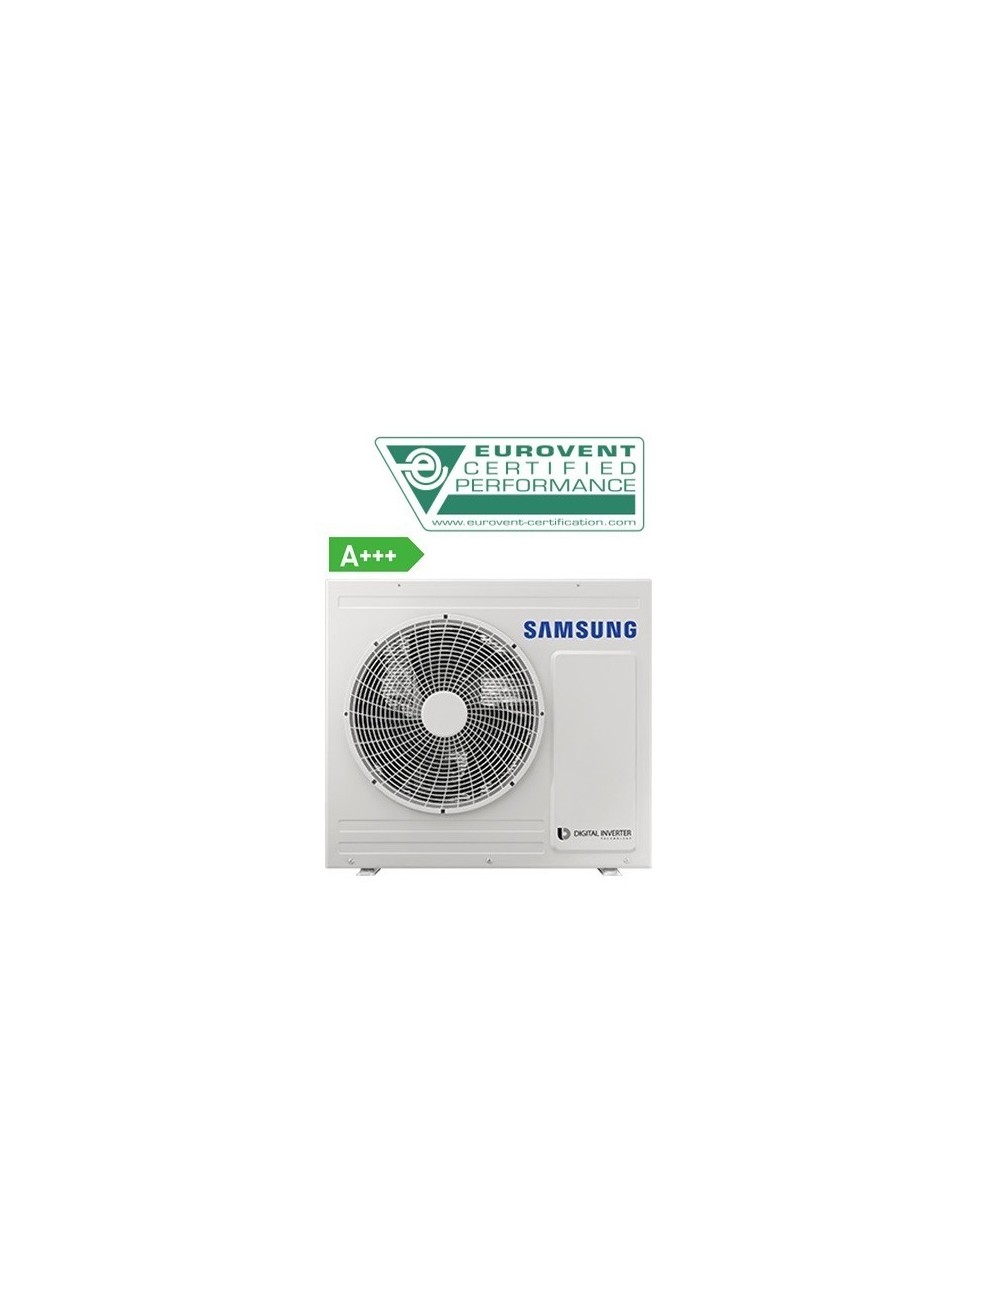 Pompa de căldura Aer-Apa Samsung monobloc –AE050RXYDEG/EU 5 KW